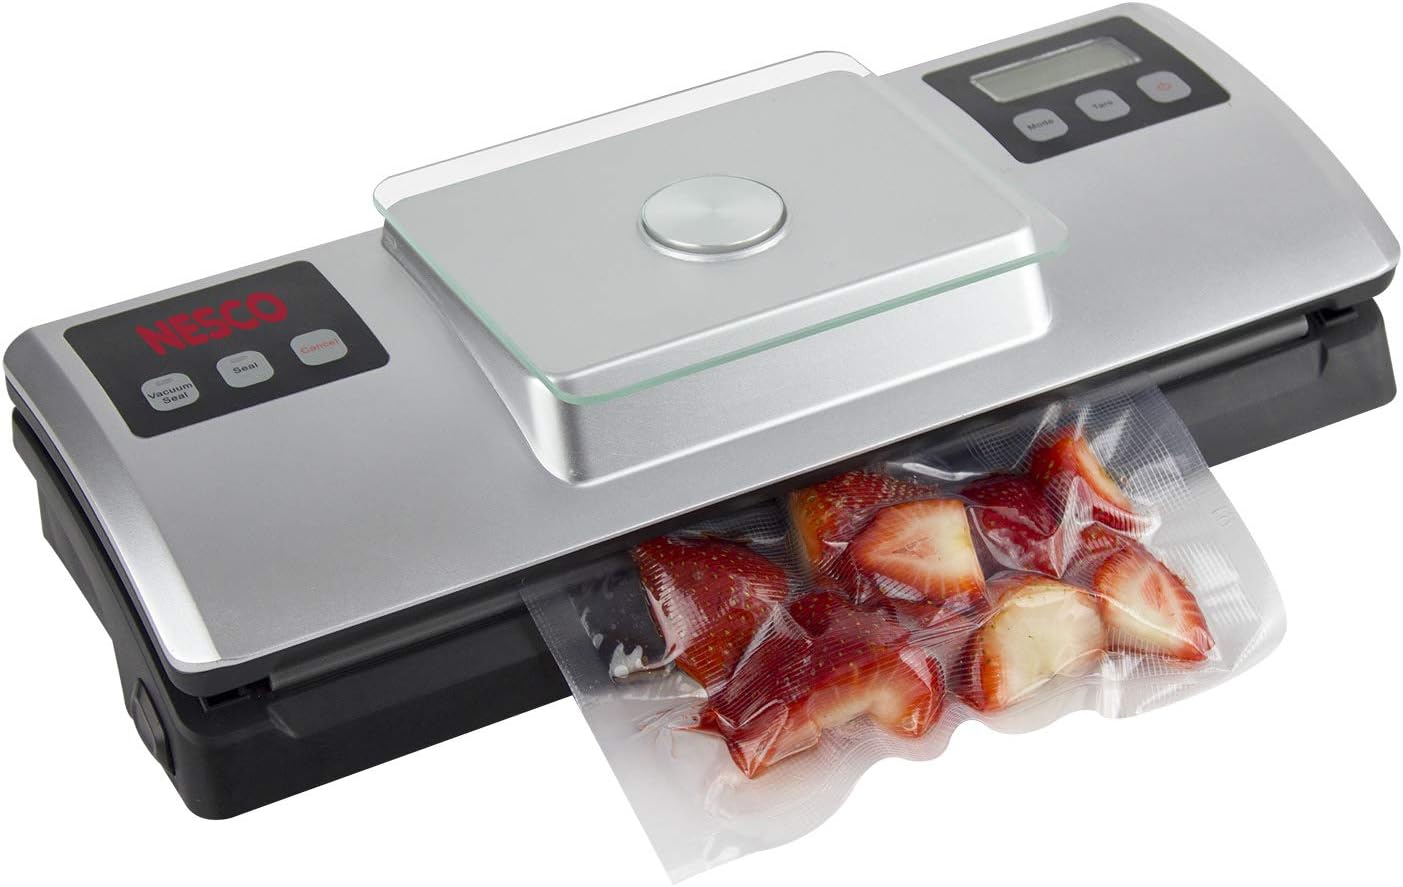 Nesco VSS-01 Automatic Food Vacuum Sealer Review